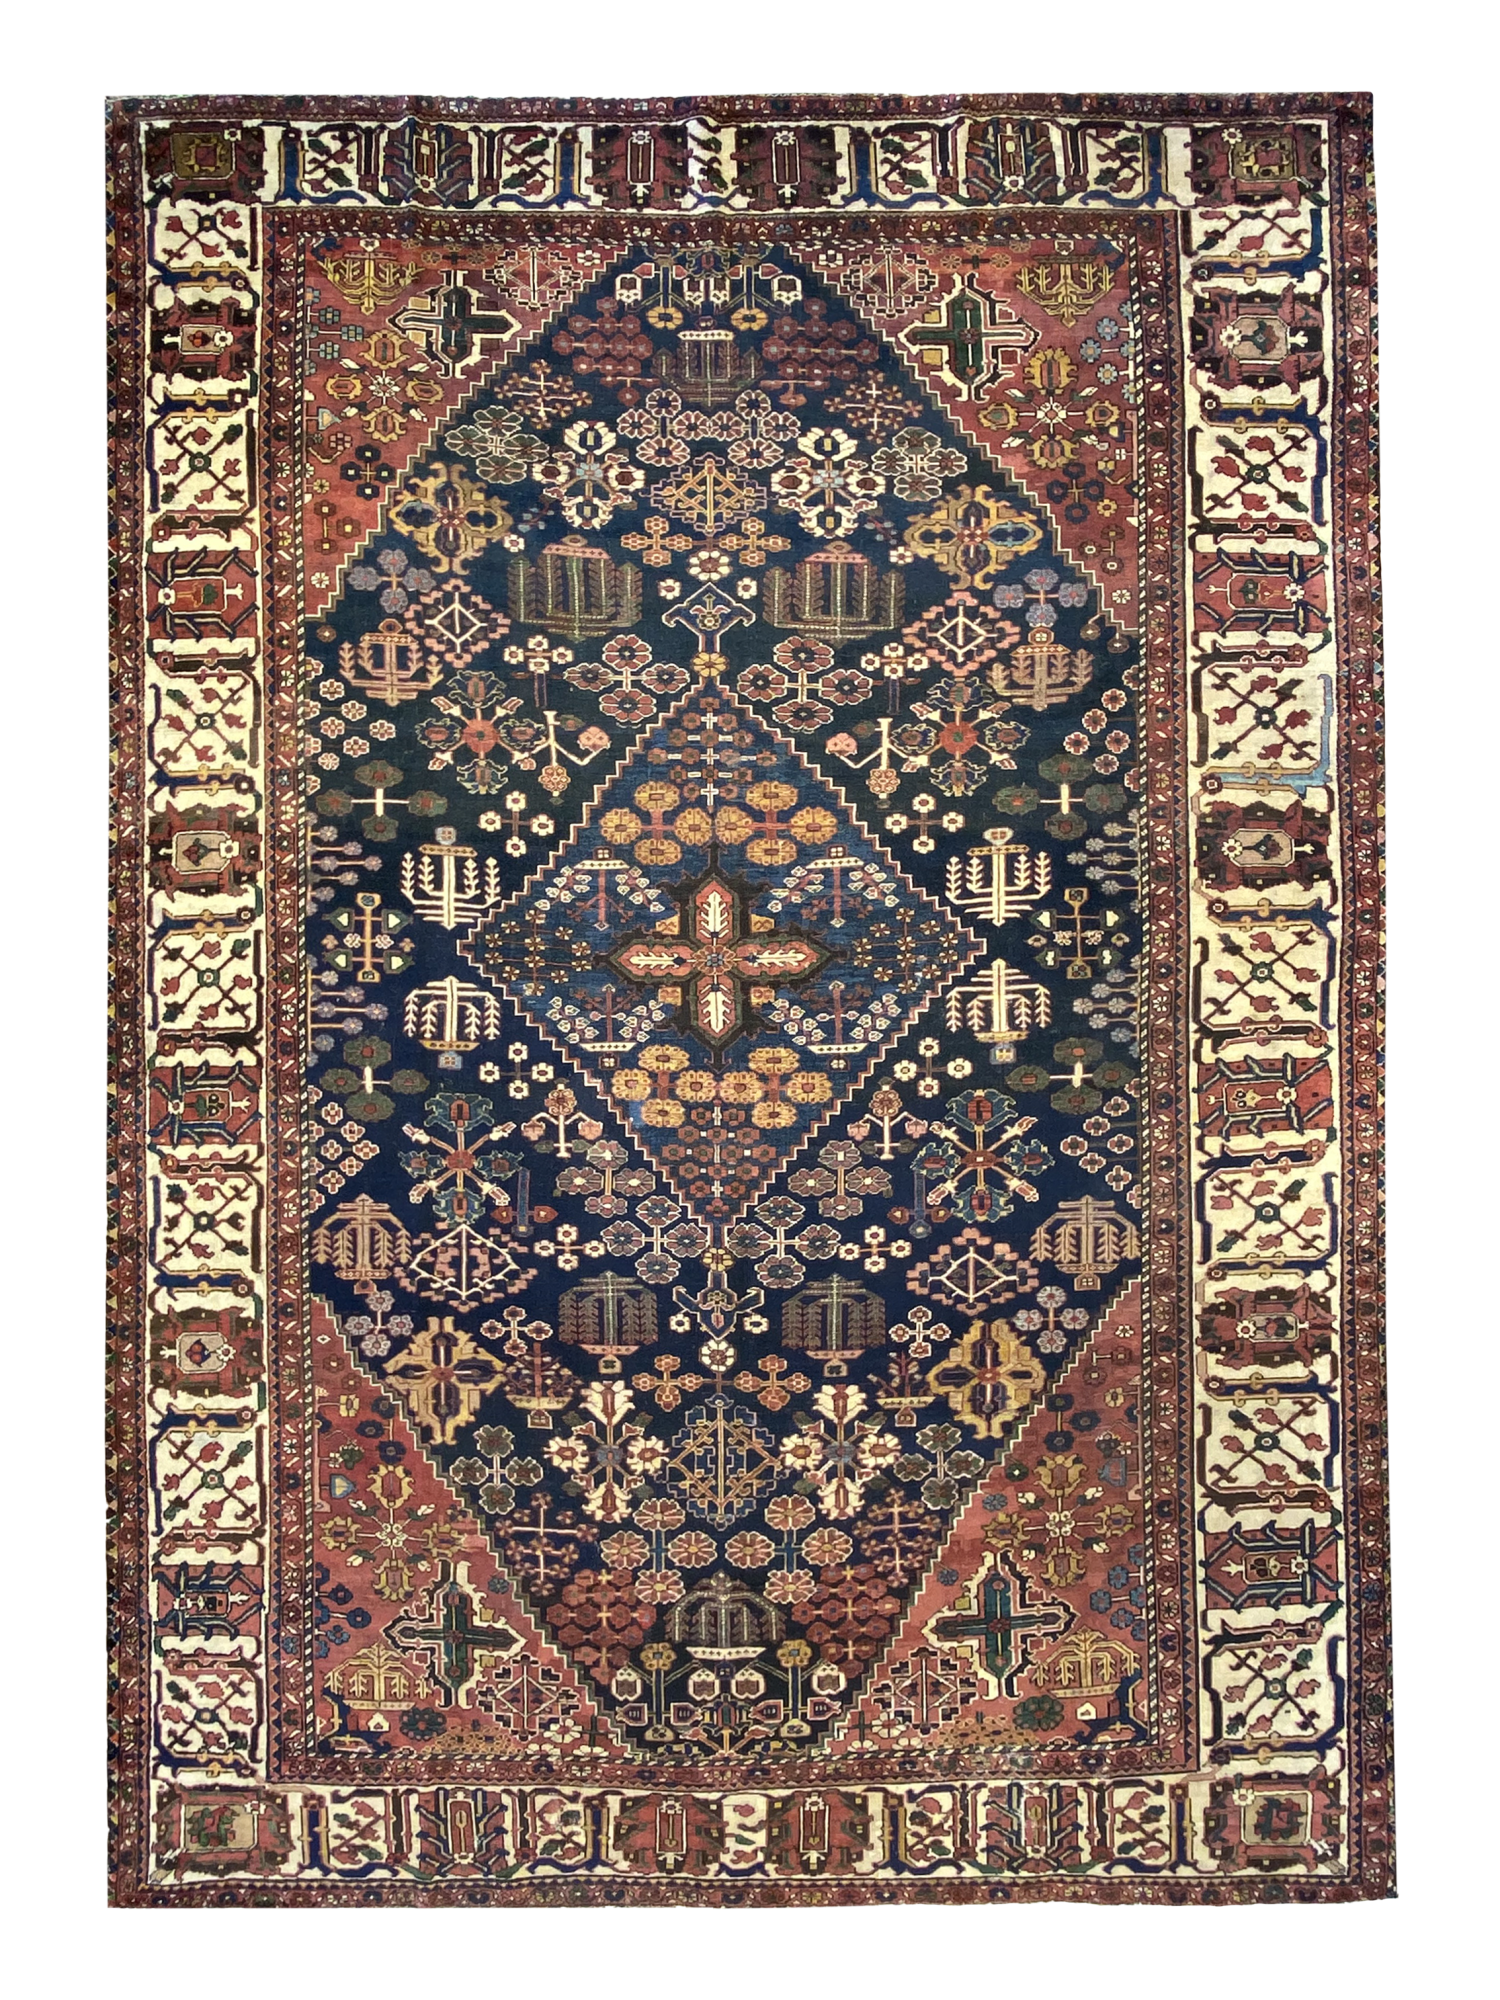 Antique Persian Rug Ziegler Bakhtiari 10' 2" x 14' 8" - Shabahang Royal Carpet